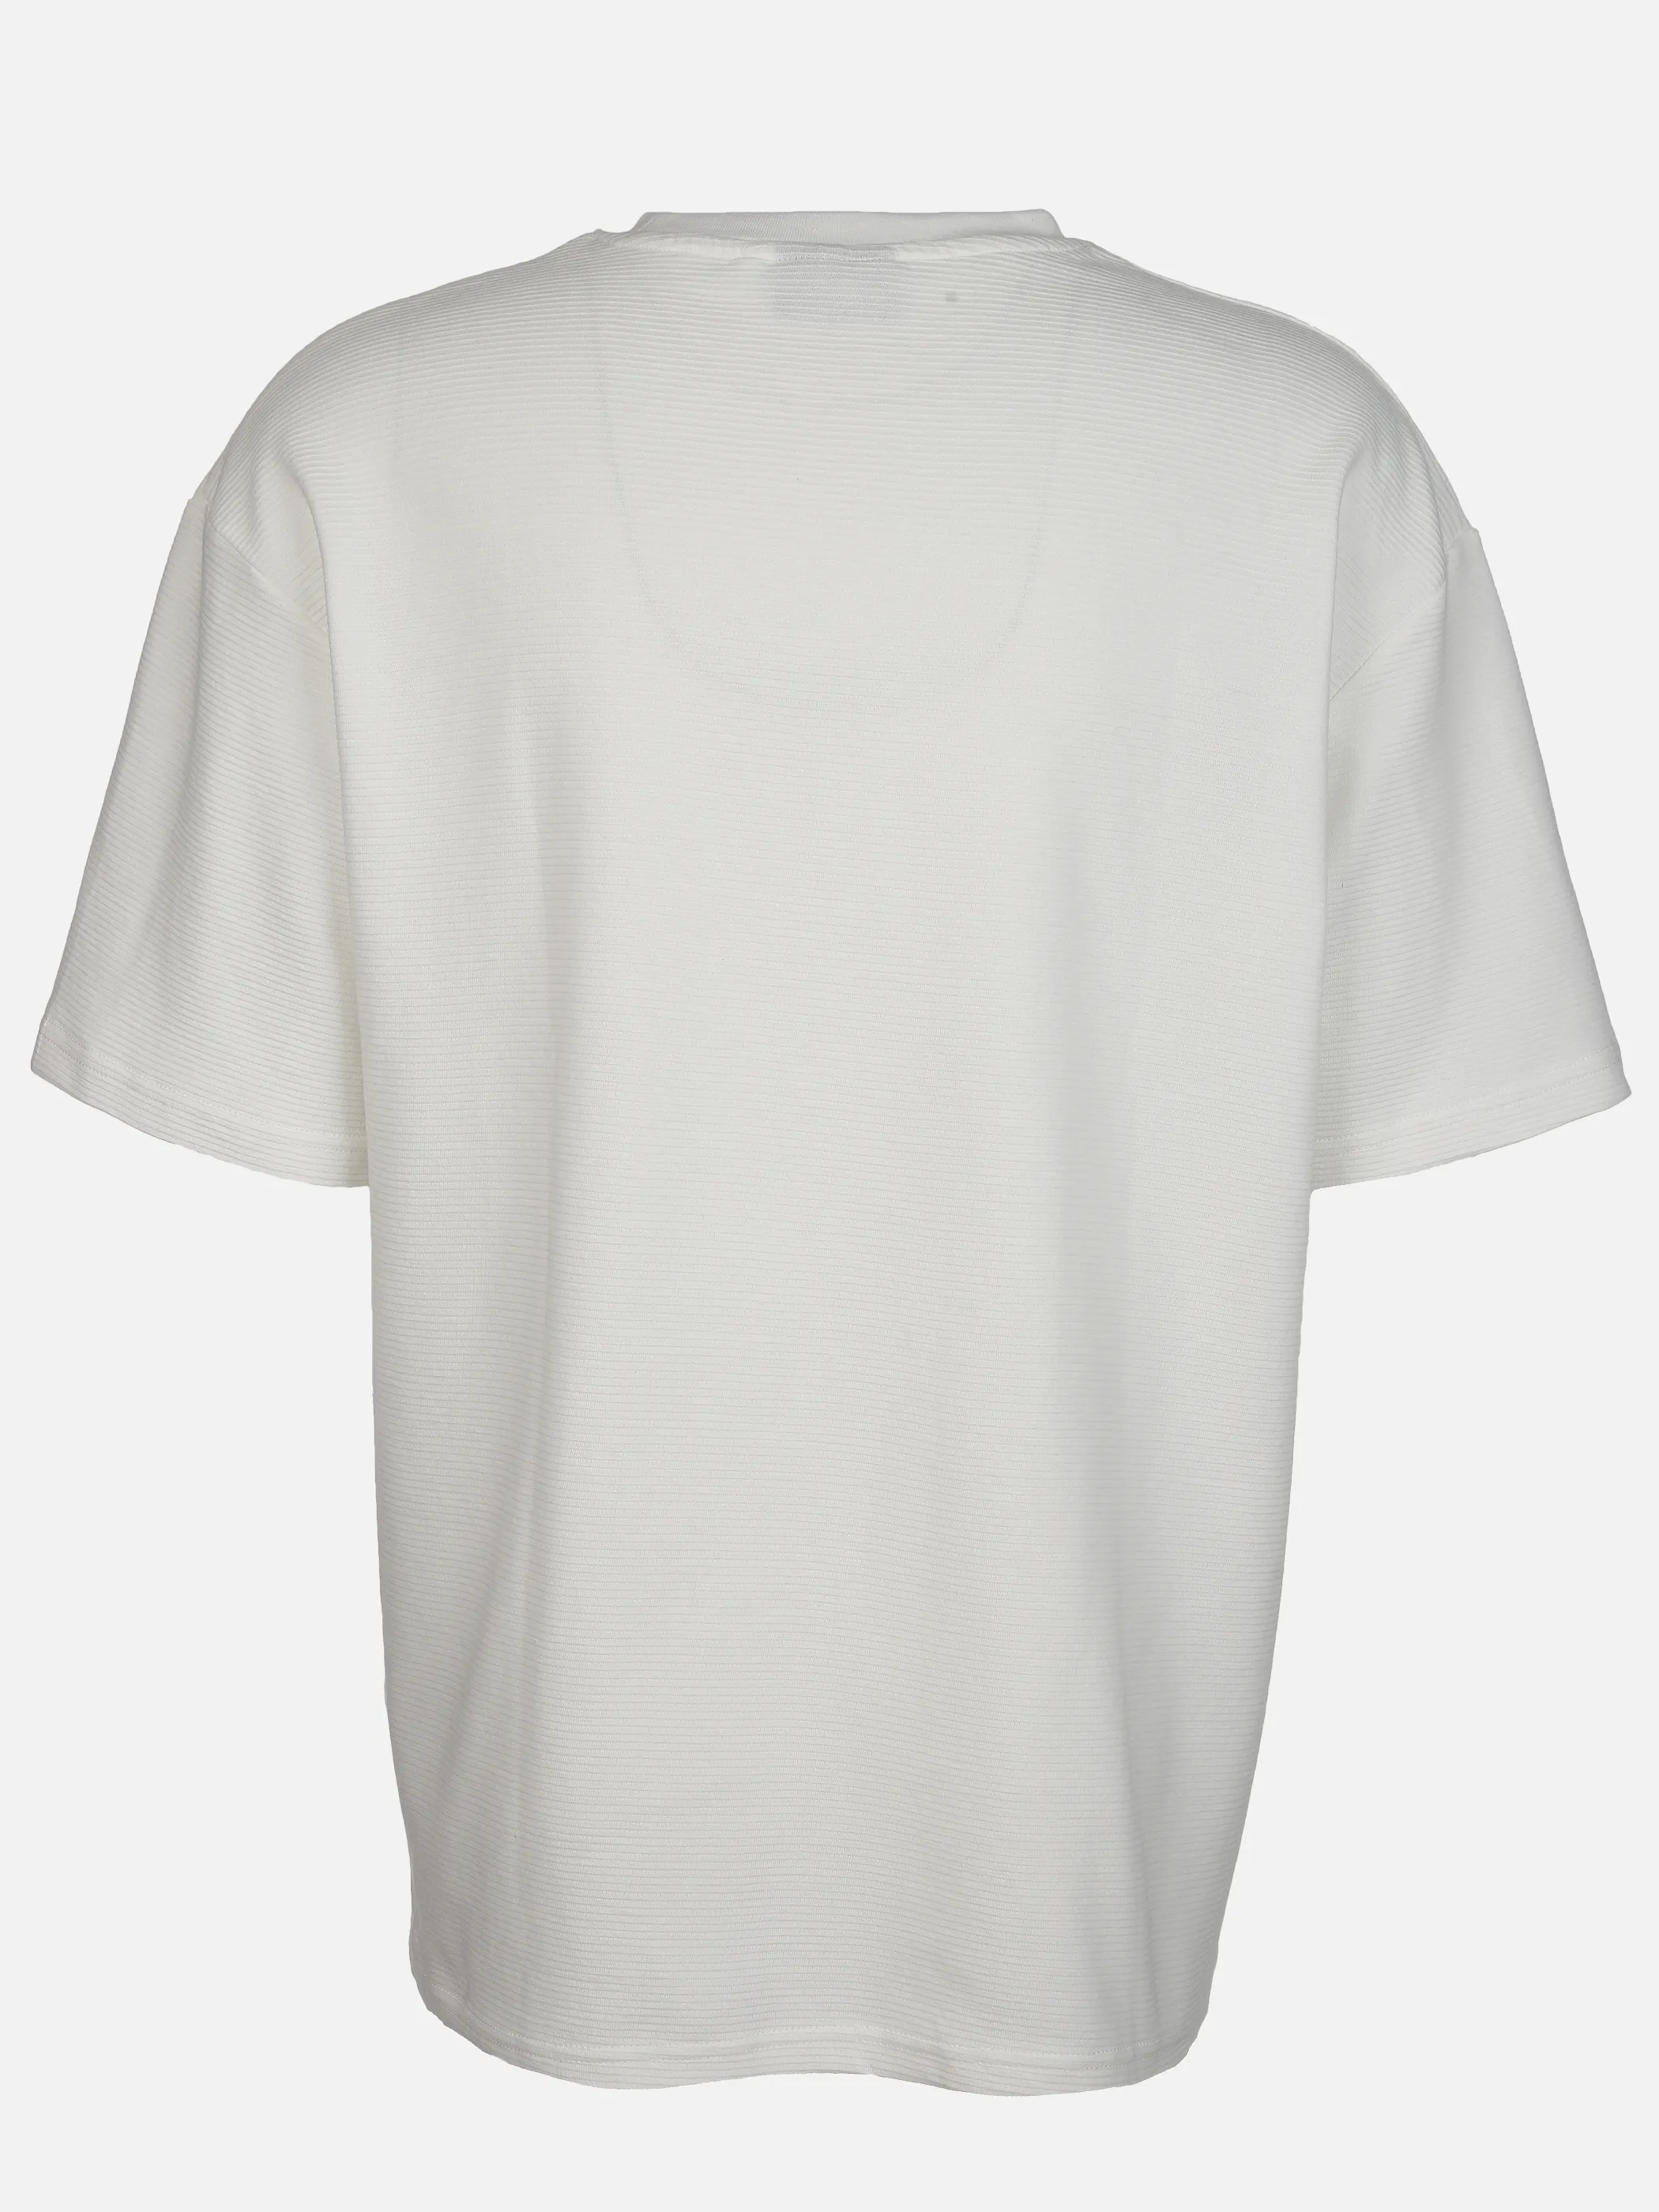 IX-O YF-He- T-Shirt Relaxed Fit Weiß 891819 OFFWHITE 2